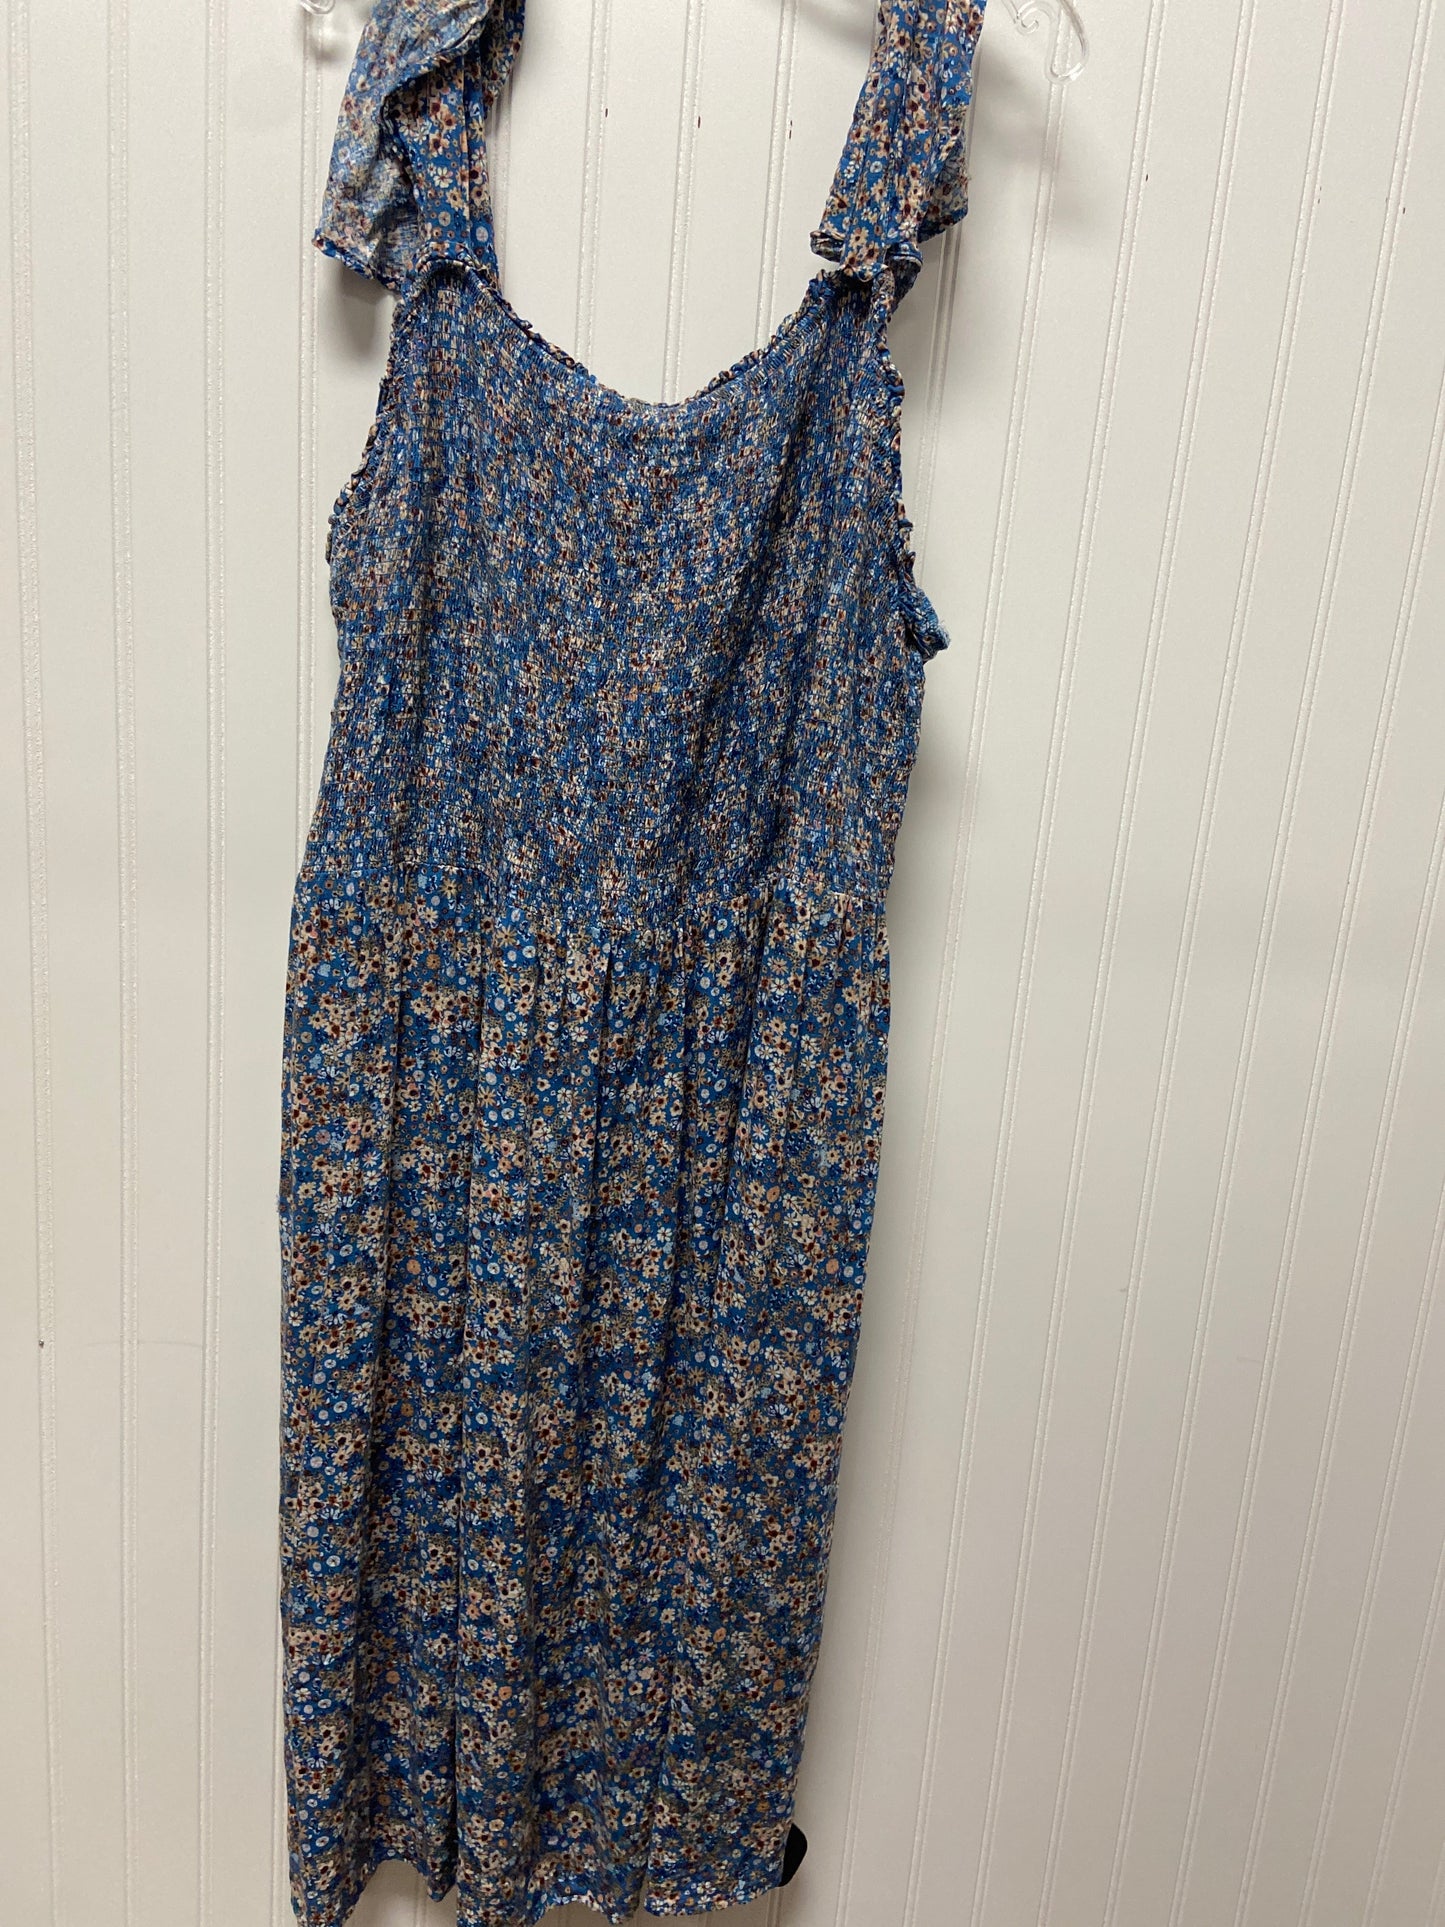 Floral Print Dress Casual Midi Sonoma, Size 2x